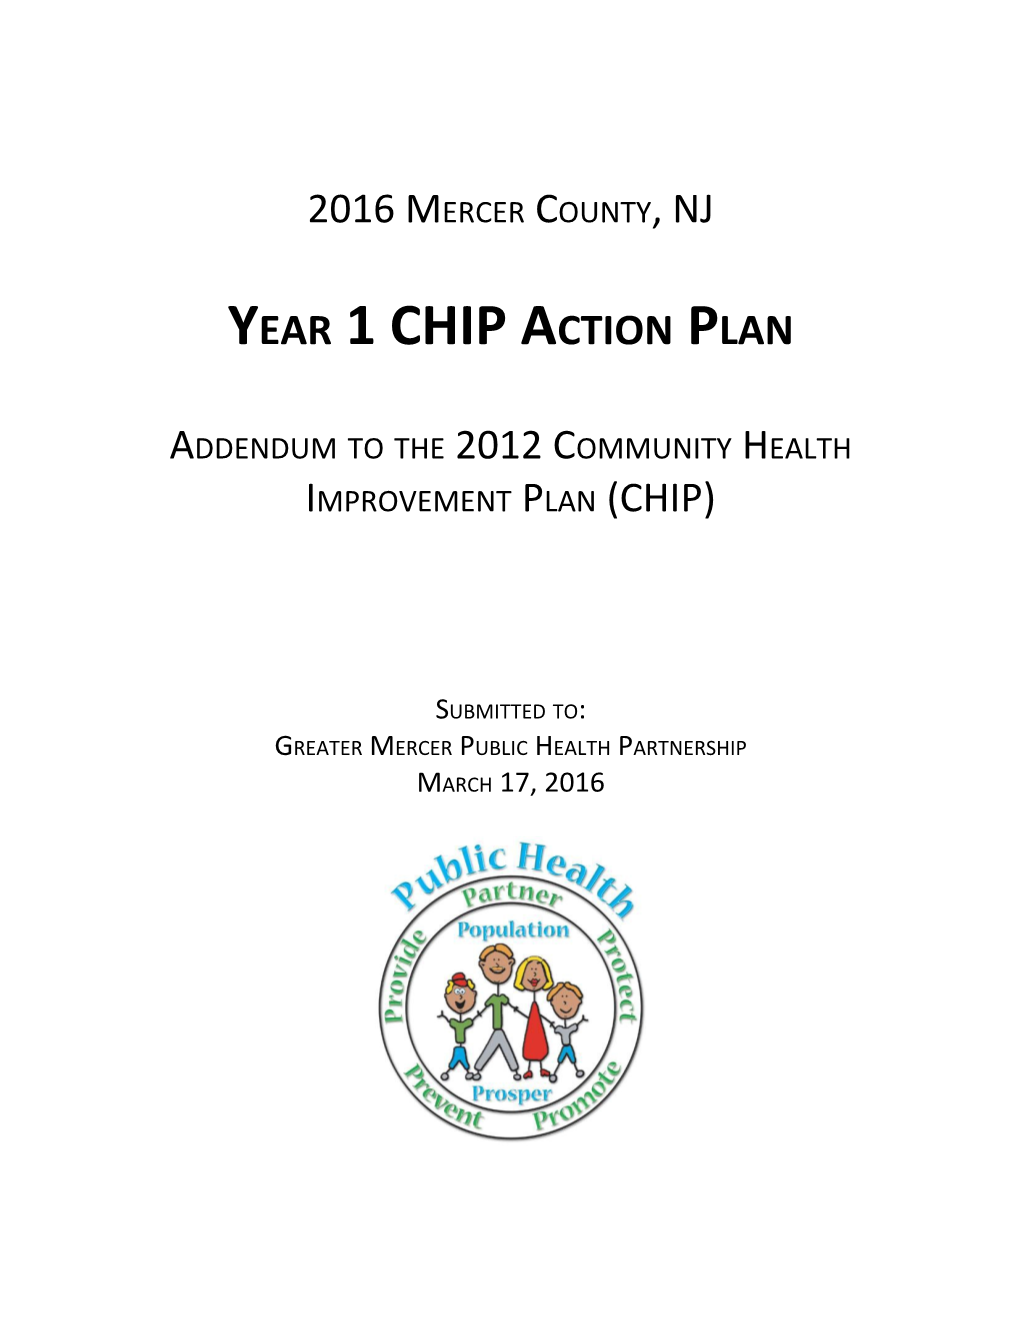 Mercer County Community Health Improvement Plan (CHIP) Year 1 Action Plan